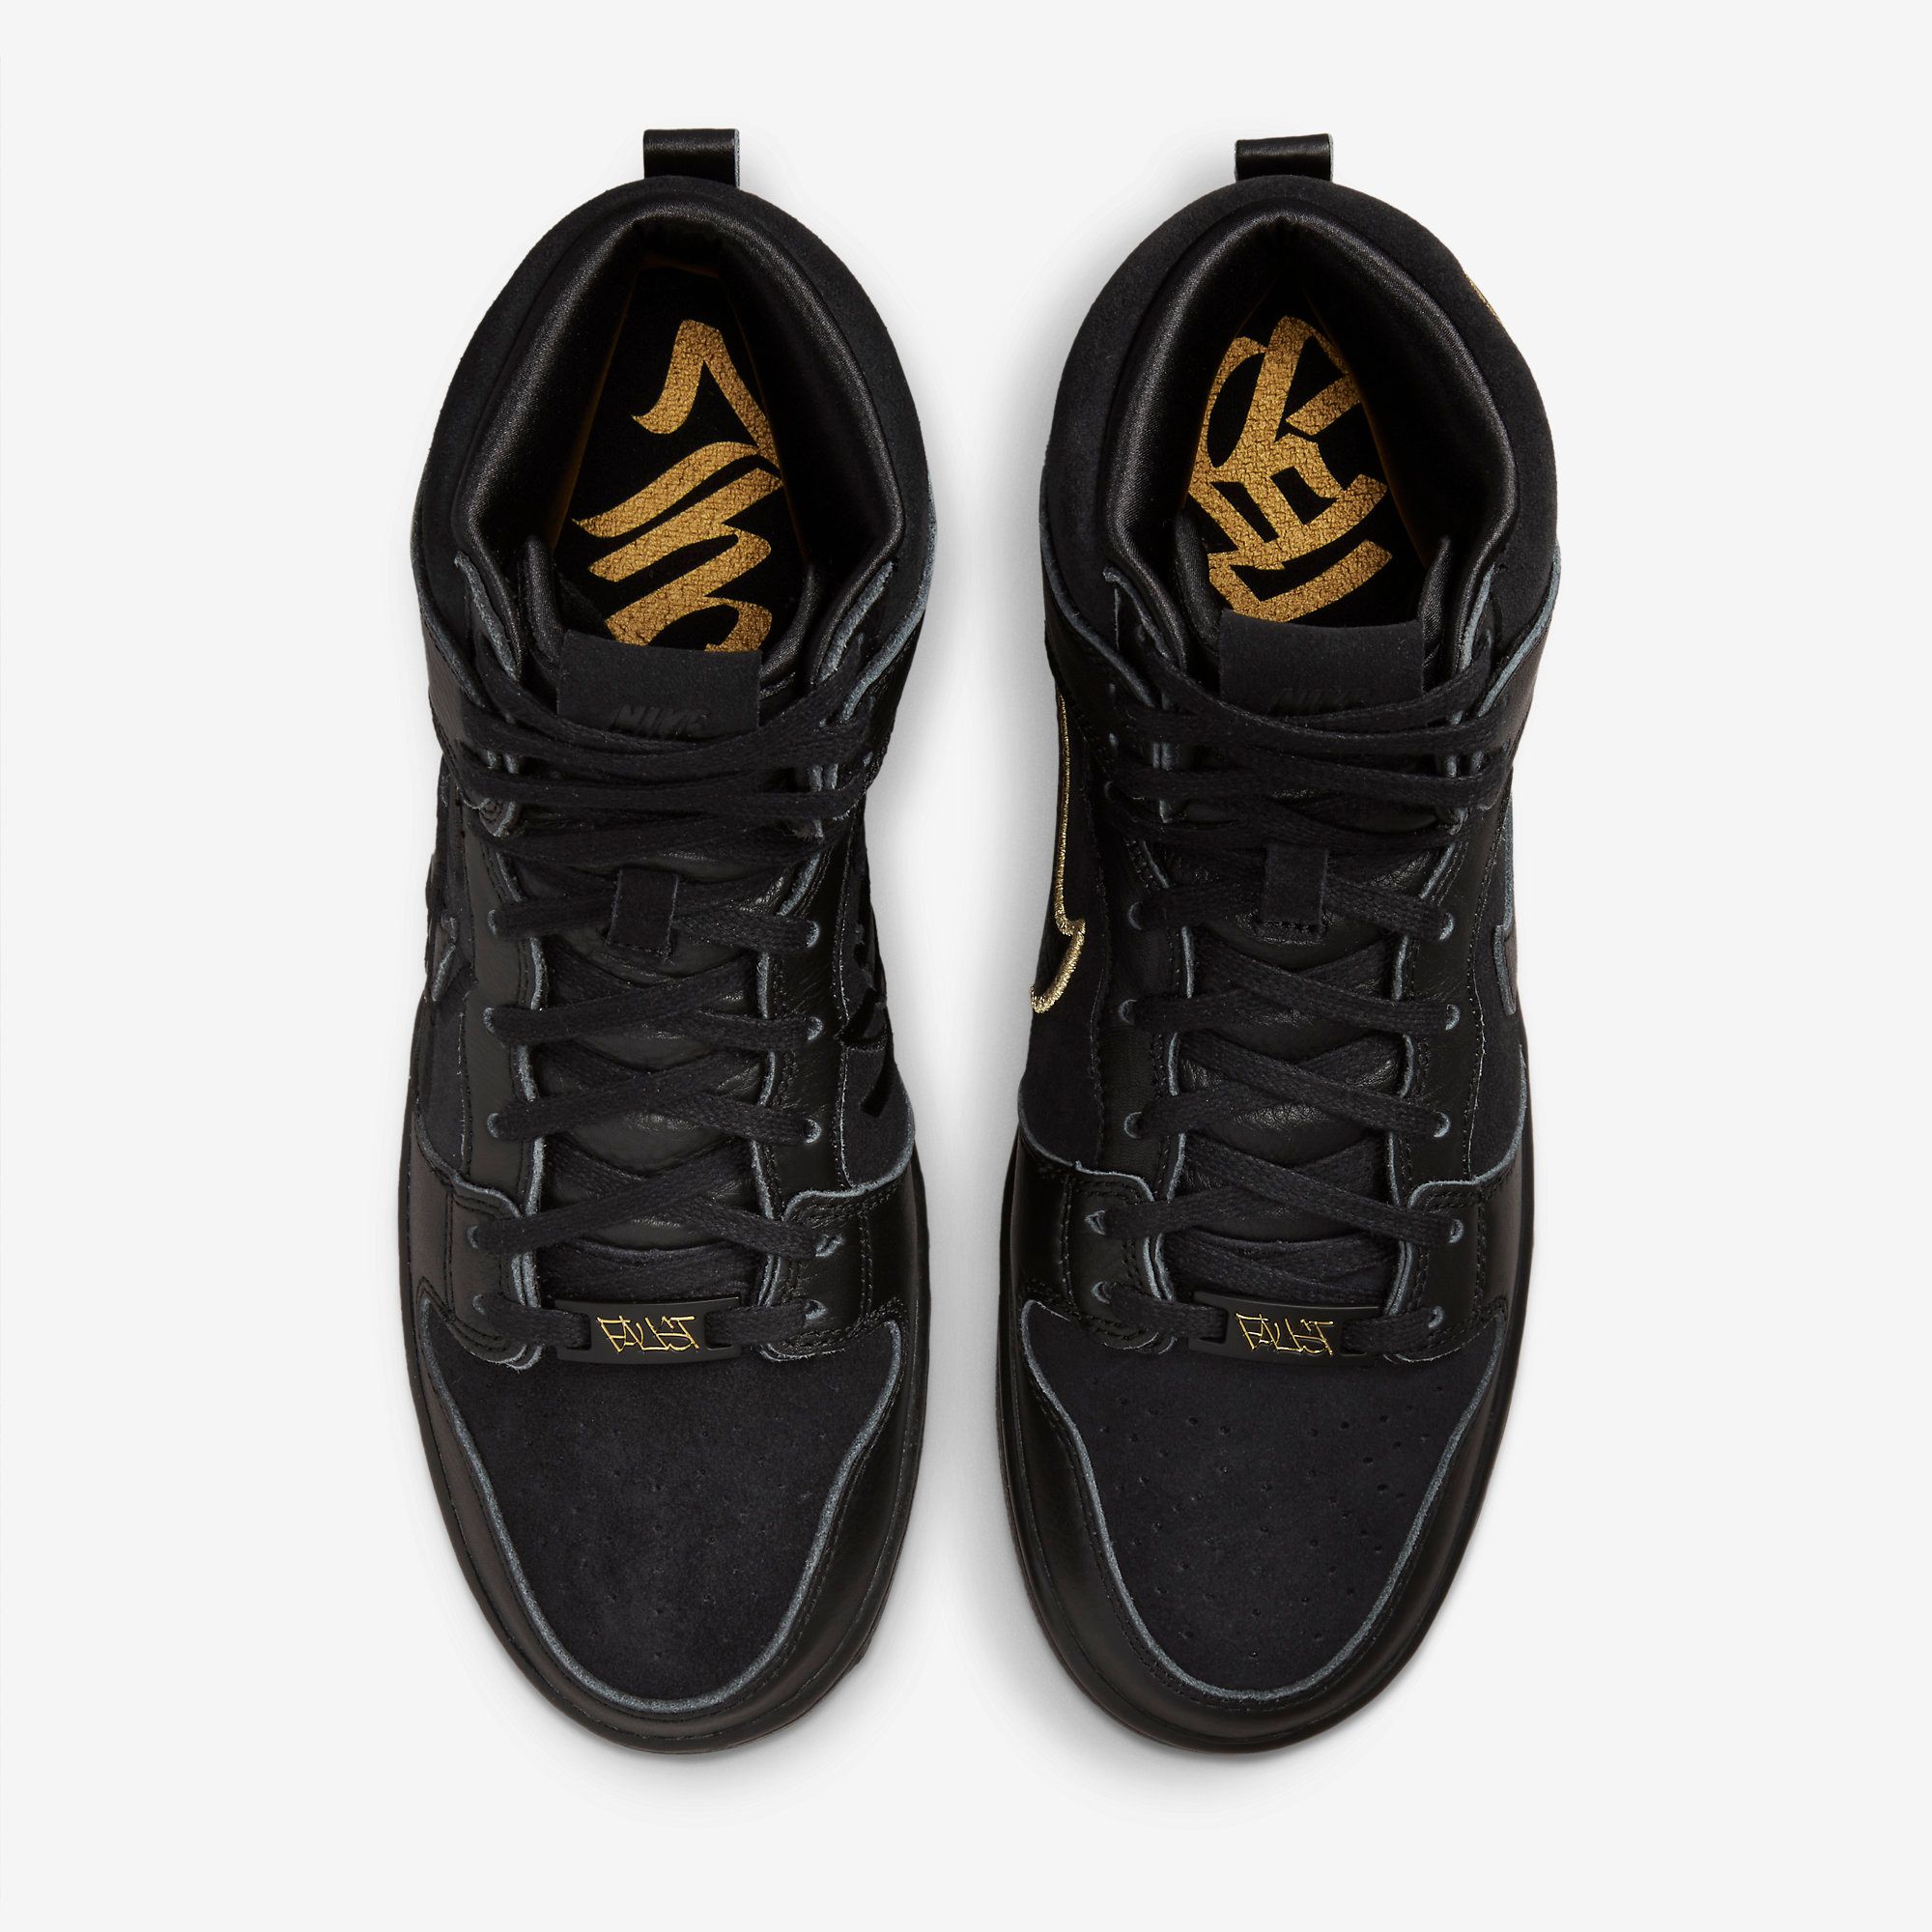  FAUST x Nike SB Dunk High - Black/Metallic Gold 